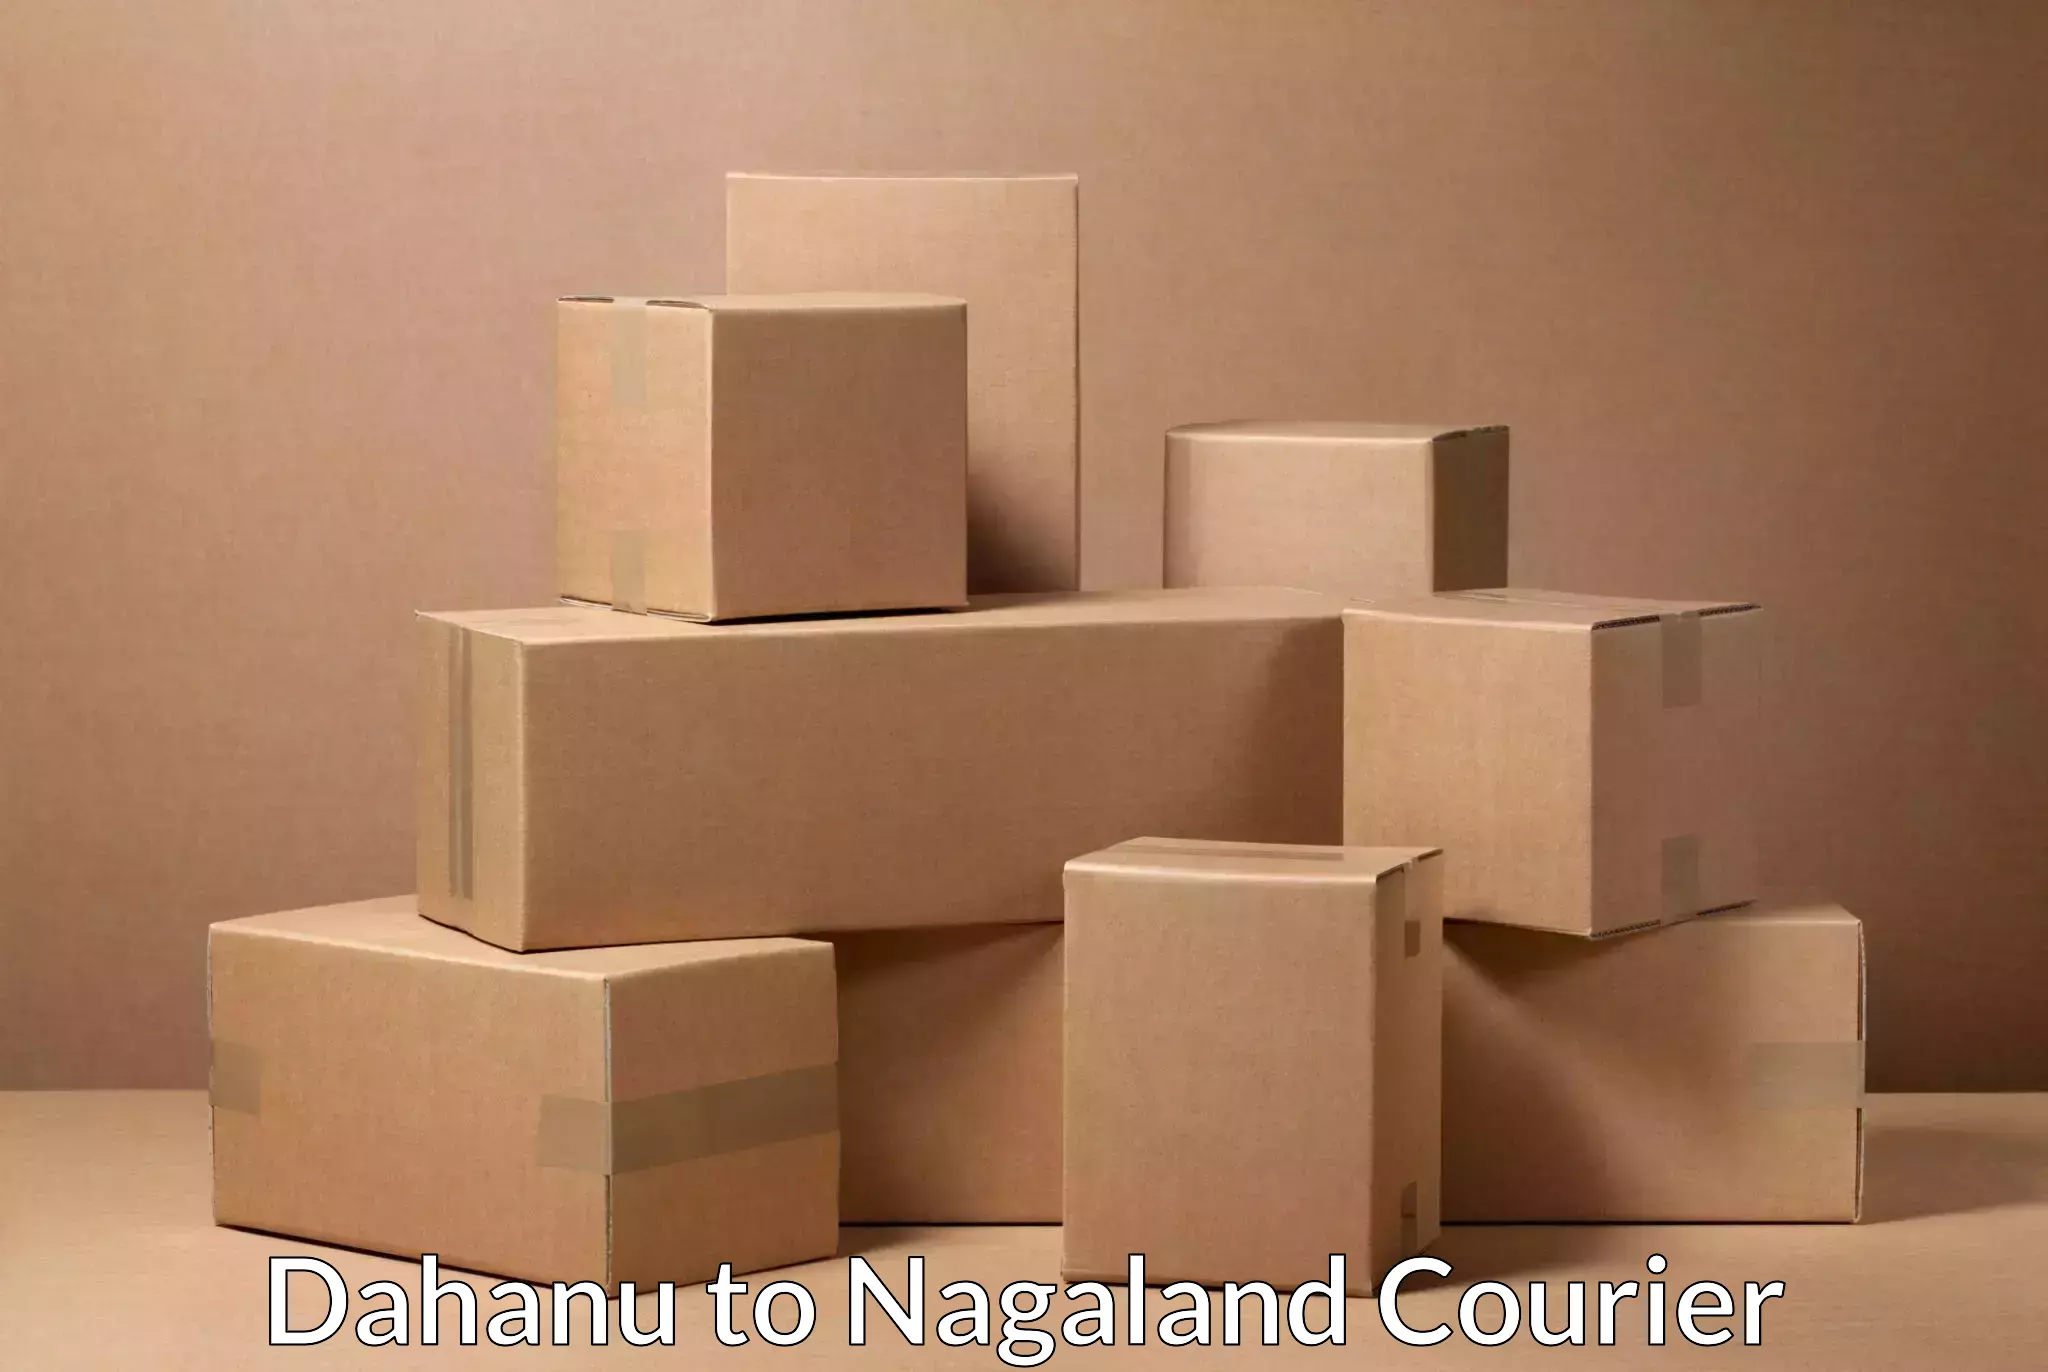 Logistics service provider Dahanu to Nagaland